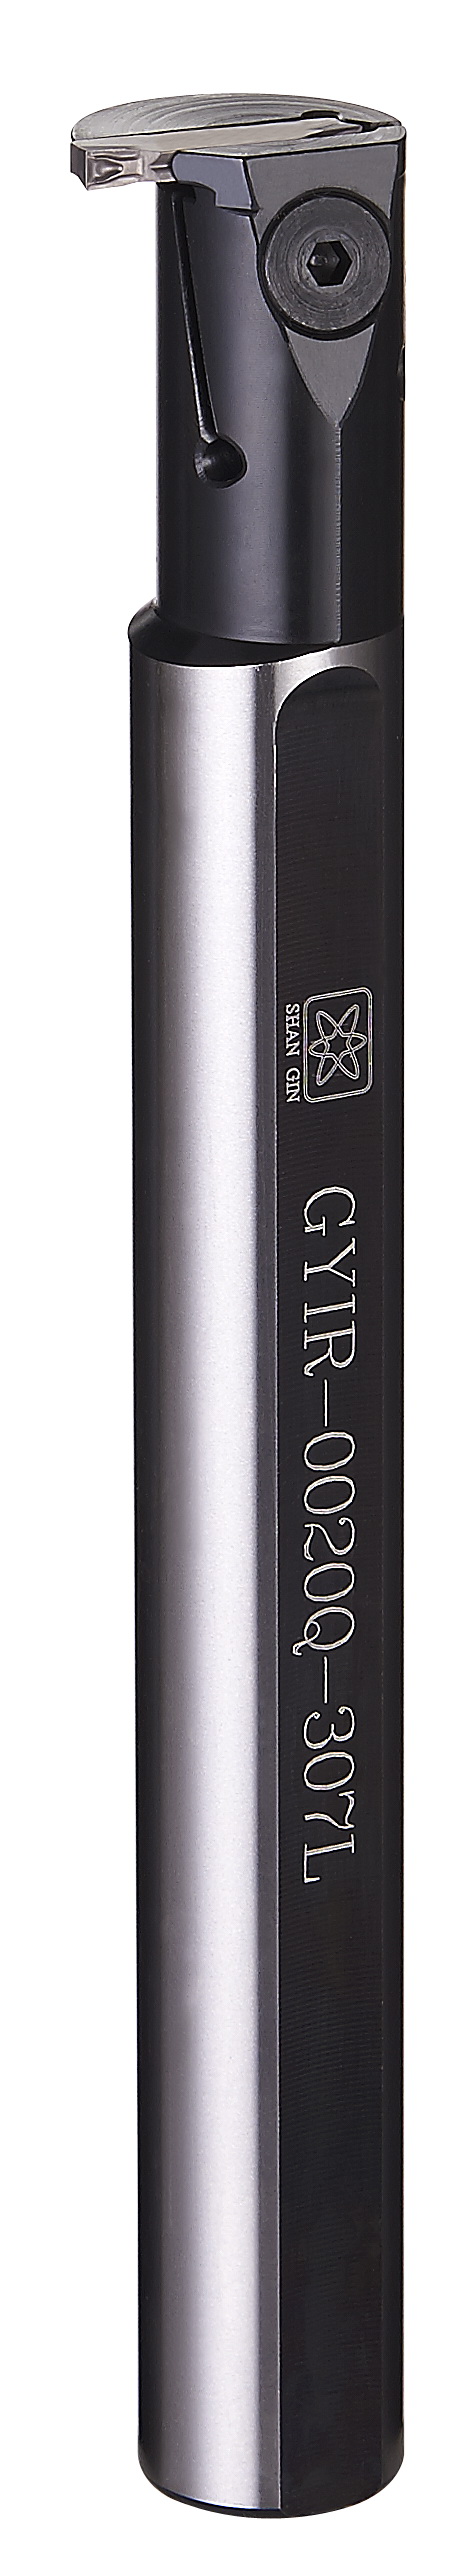 Catalog|GYIR (GY2M) External Grooving Tool